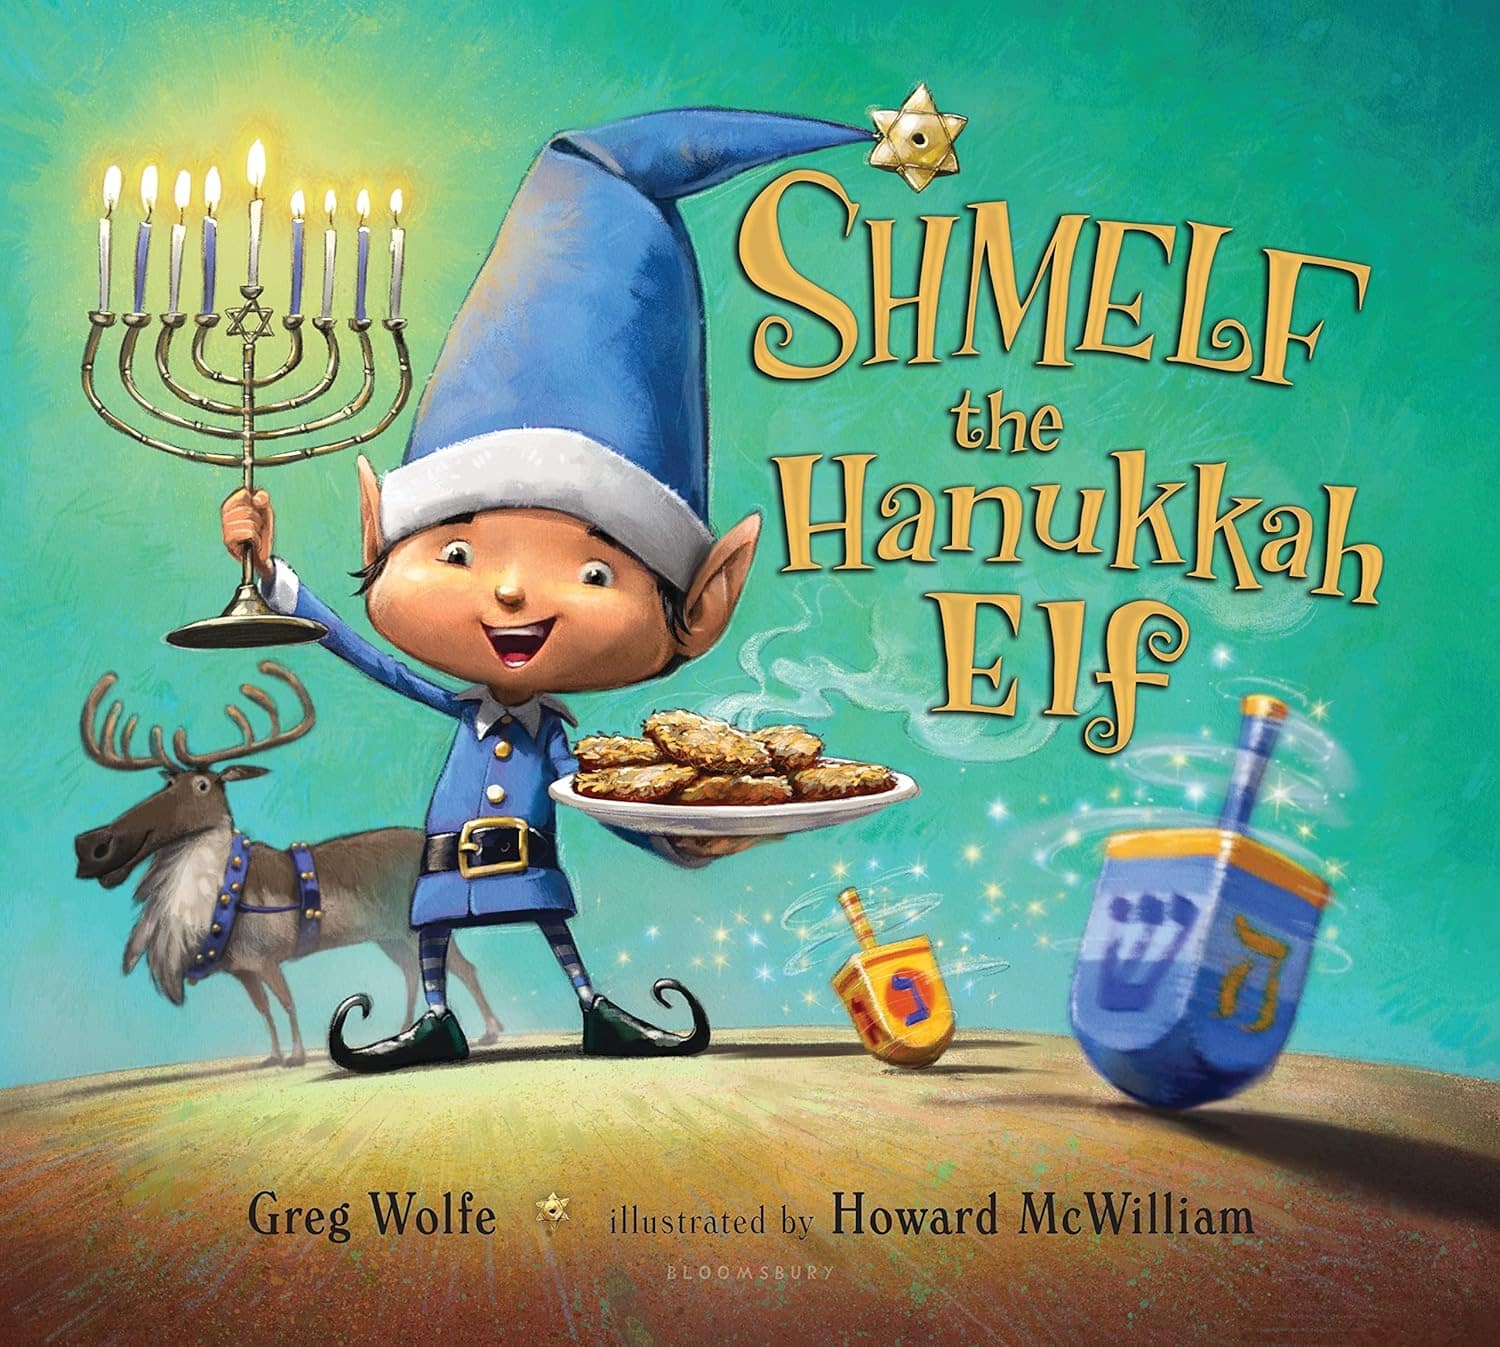 "Shmelf the Hanukkah Elf" by Greg Wolfe